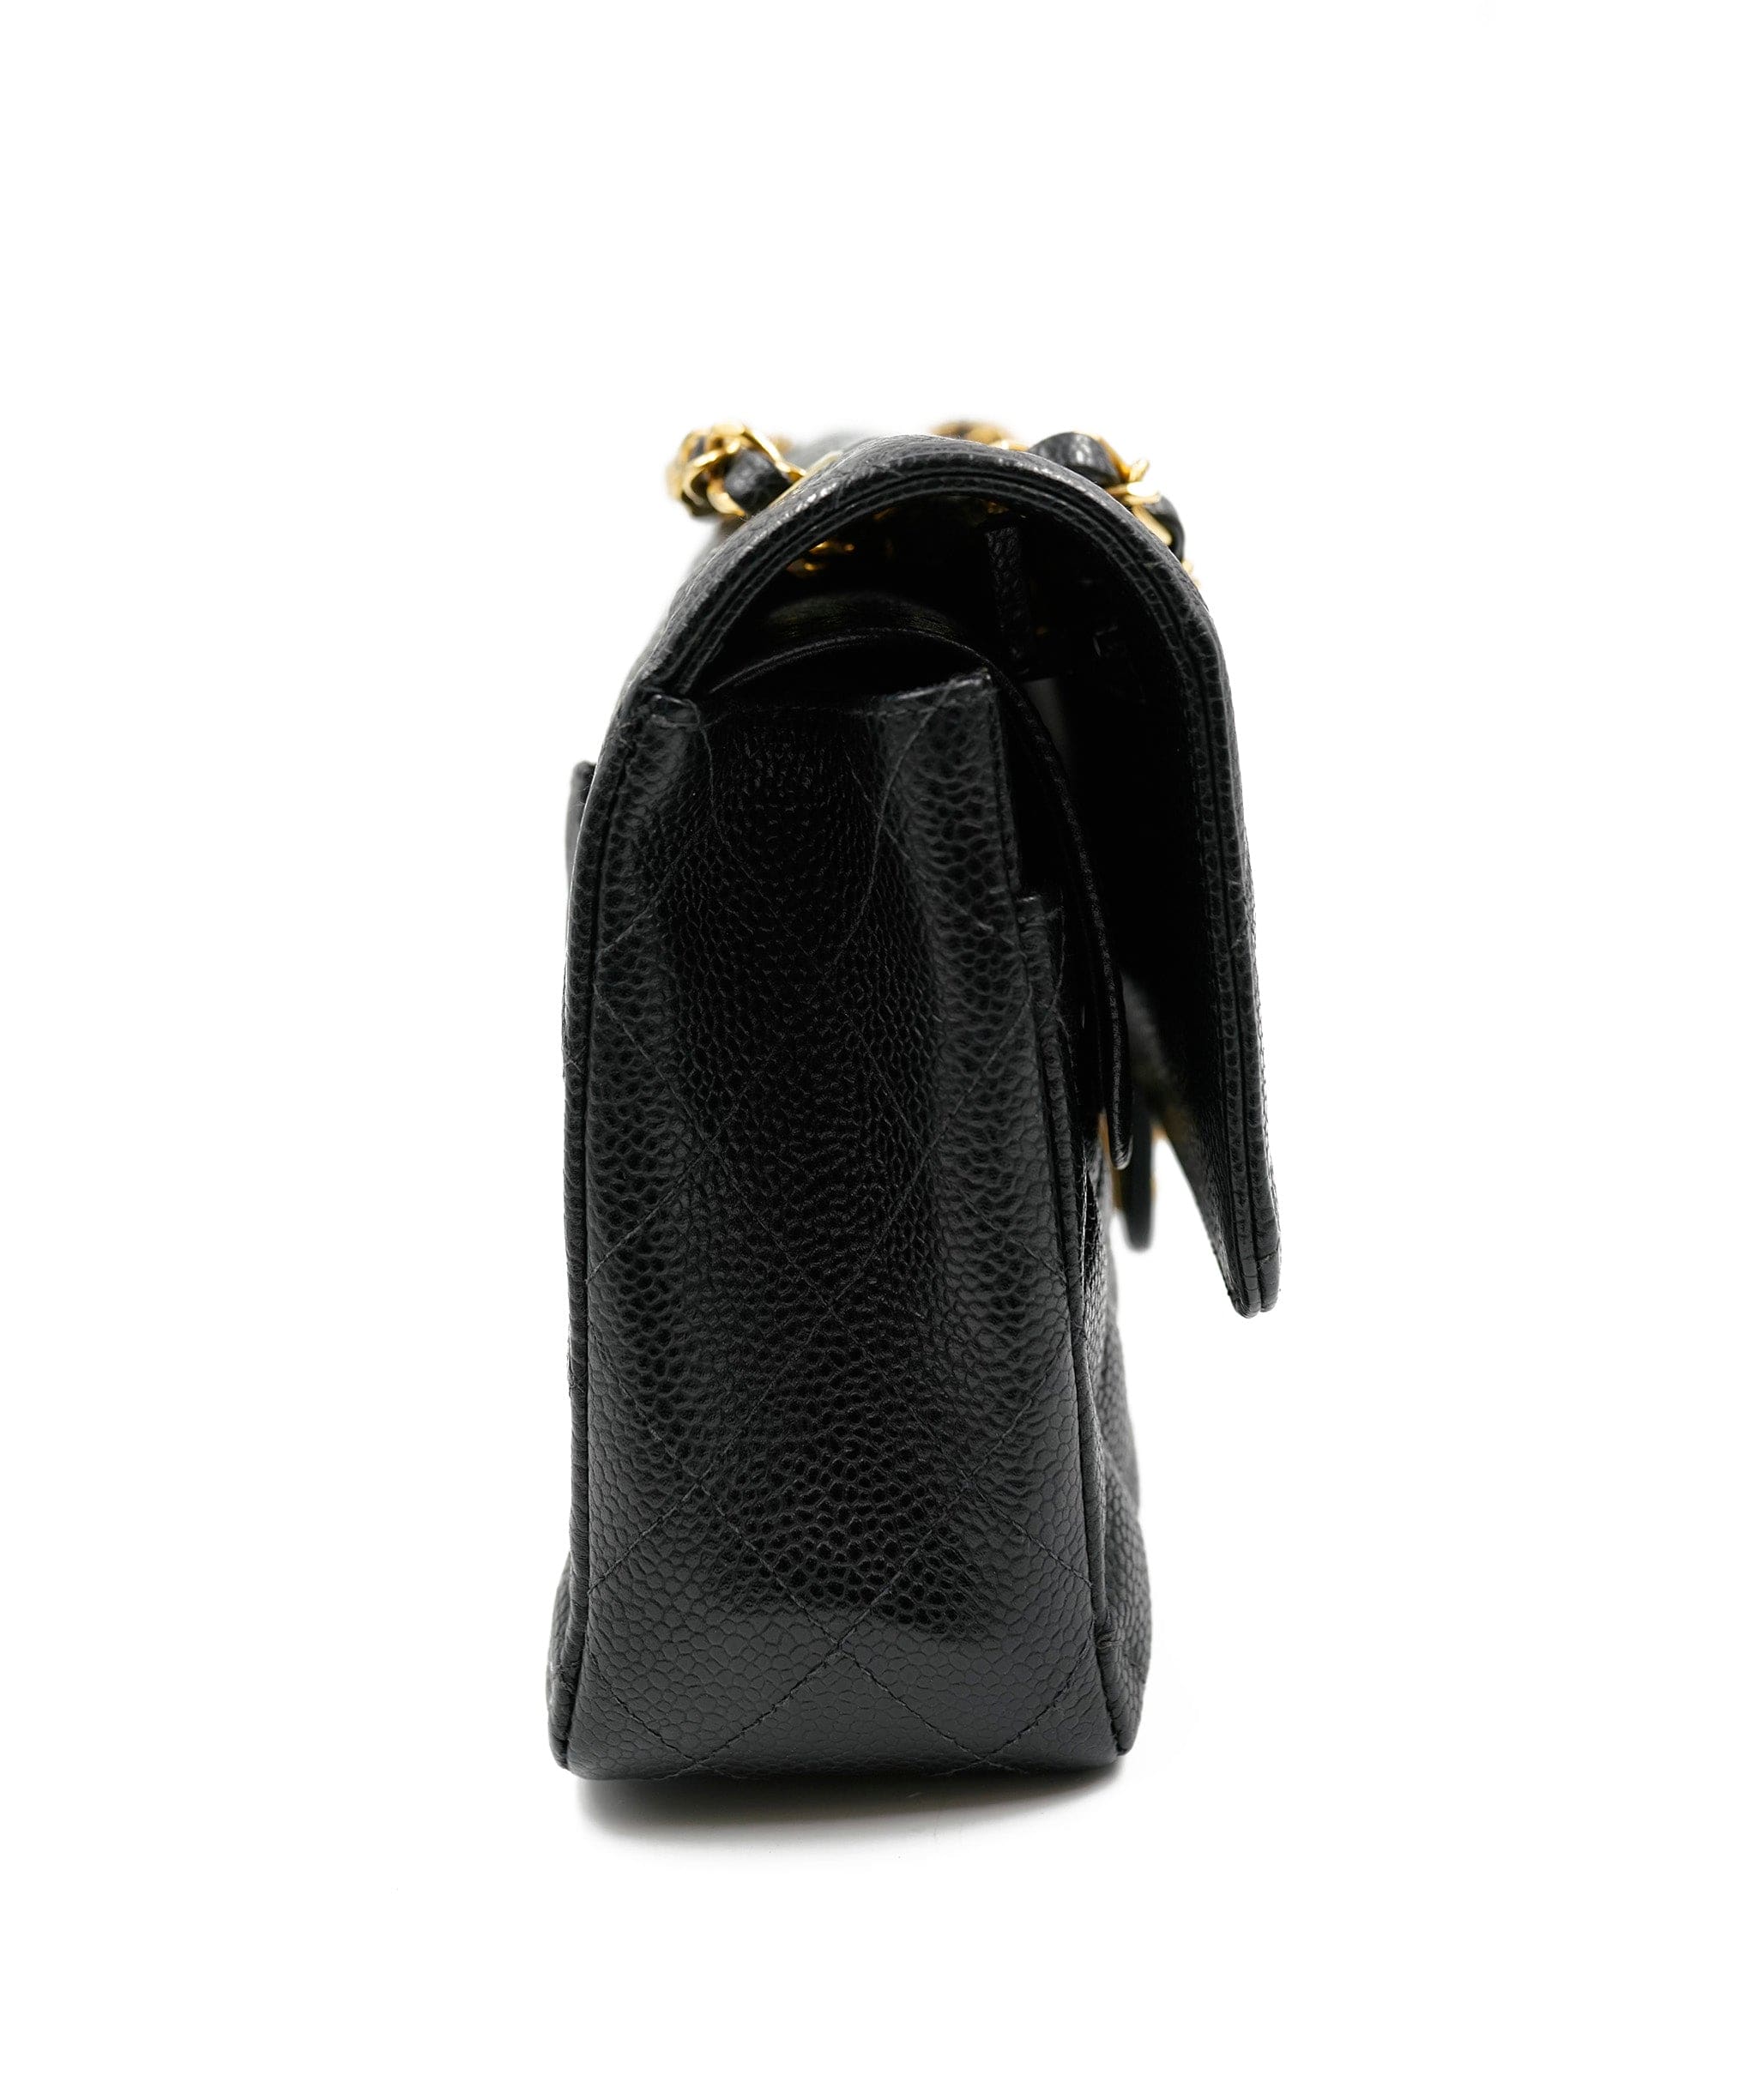 Chanel Chanel 10" Caviar skin bag with GHW - AWL4069